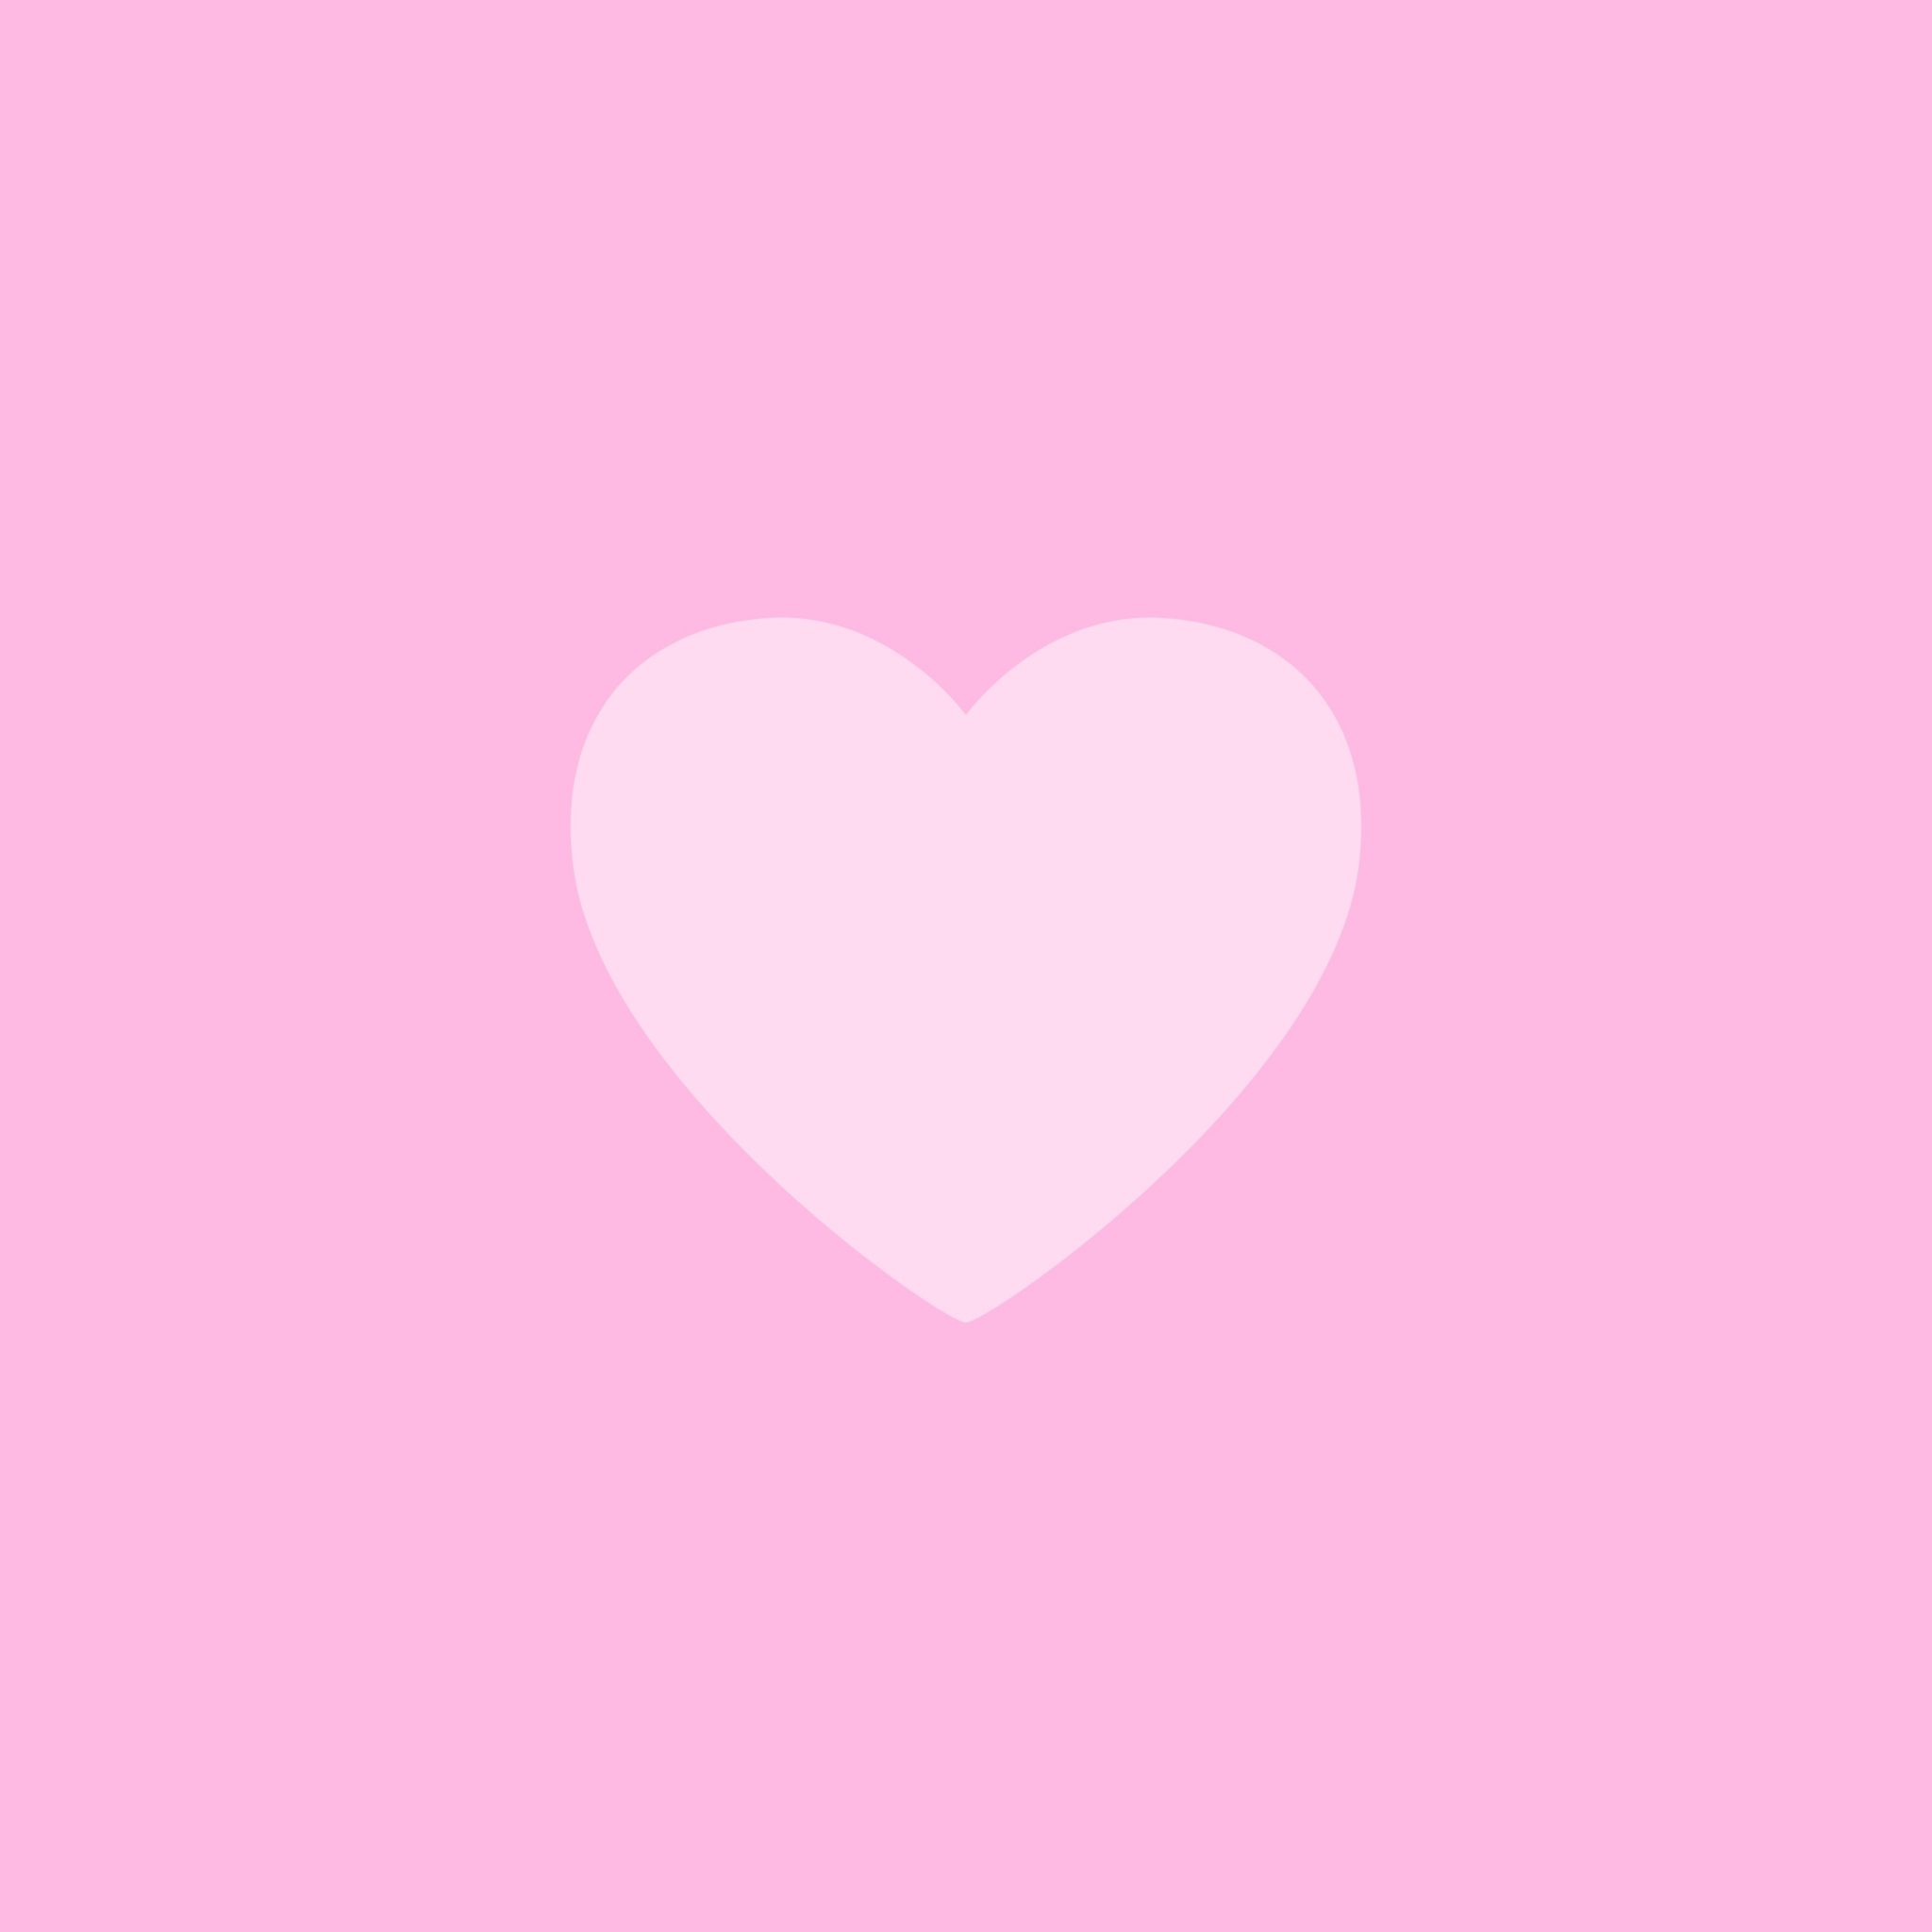 2048x2048 wallpapers iPad retina Love Heart Pink Background iPad Wallpaper 2048x2048 pixels resolution